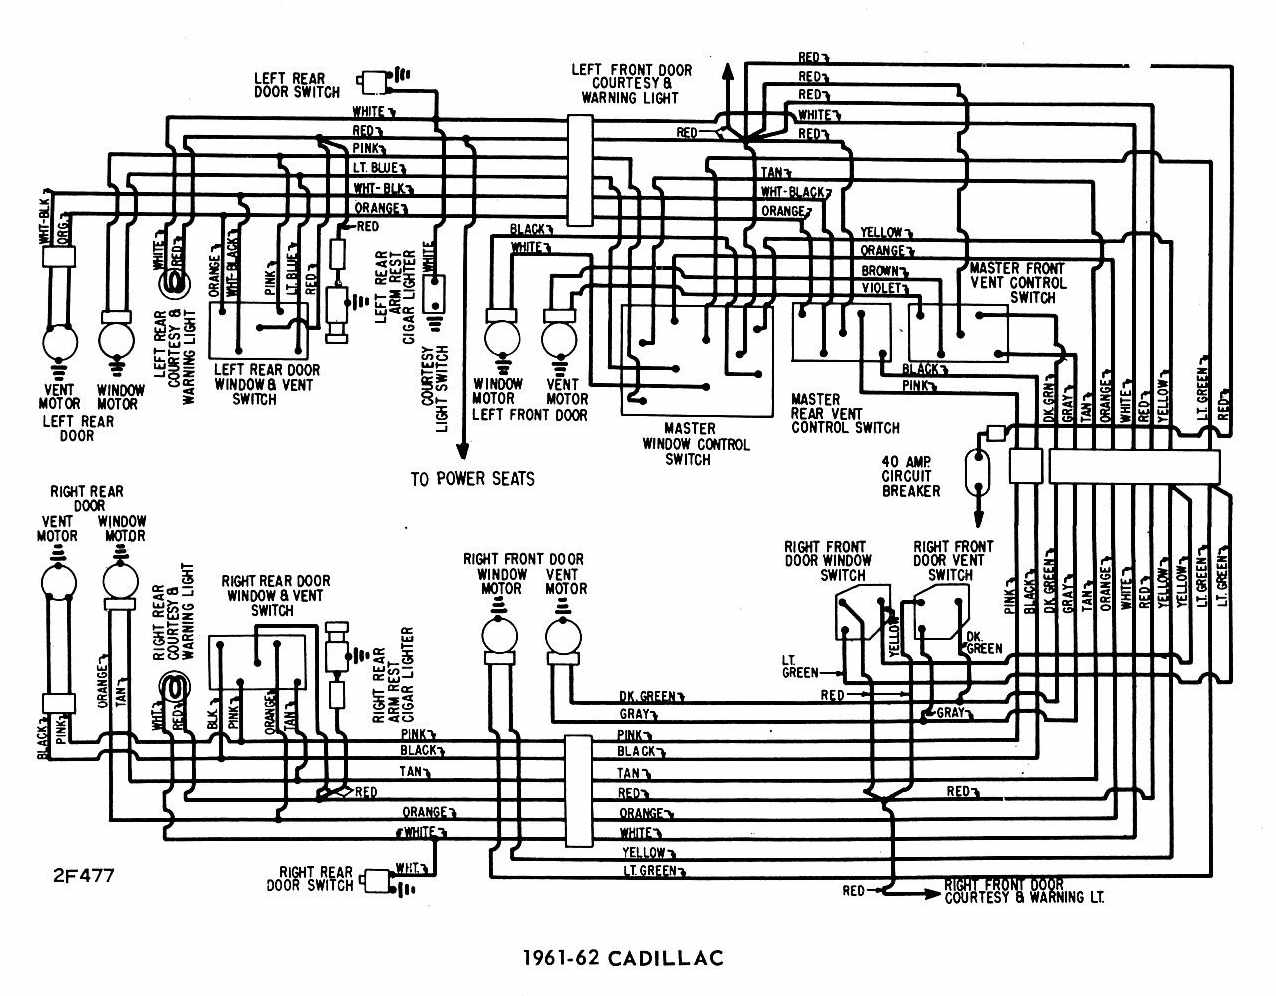 CADILLAC - Car PDF Manual, Wiring Diagram & Fault Codes DTC Car Stereo Wiring Diagram for Cadillac CTS CAR PDF Manuals & Fault Codes DTC